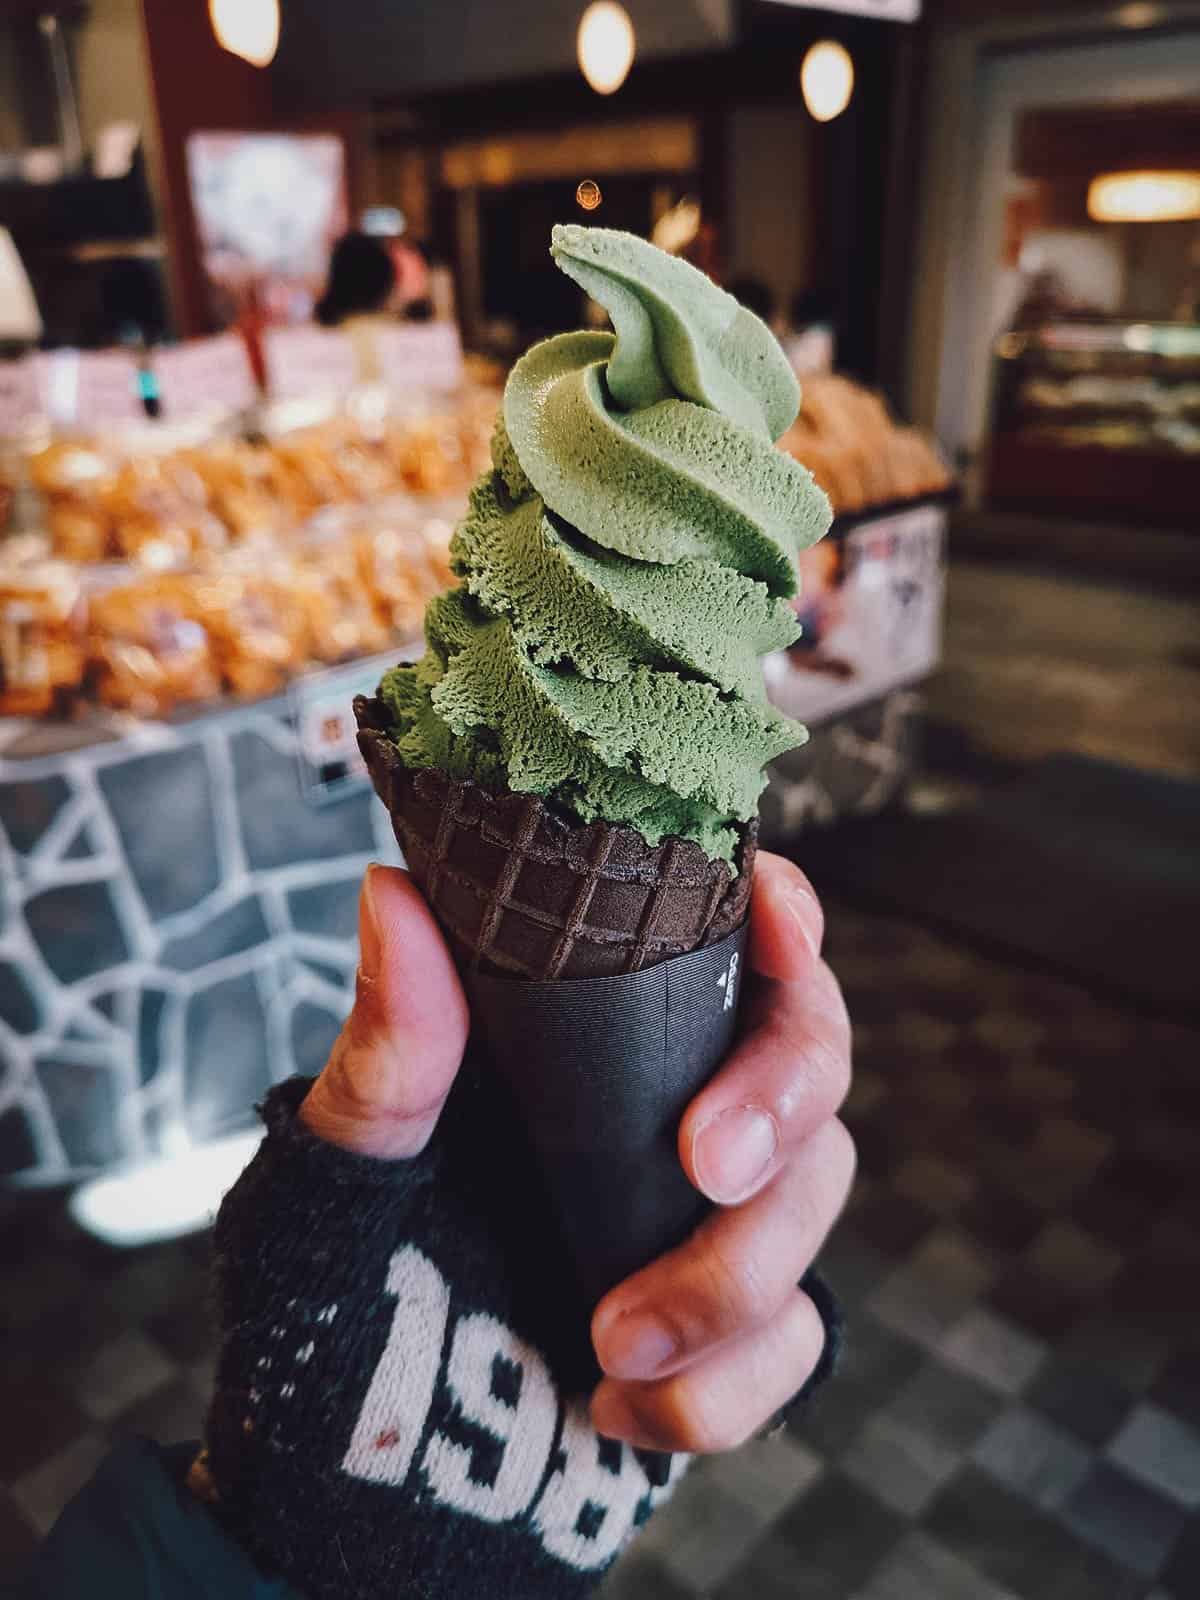 Soft serve ice cream cone made with matcha green tea